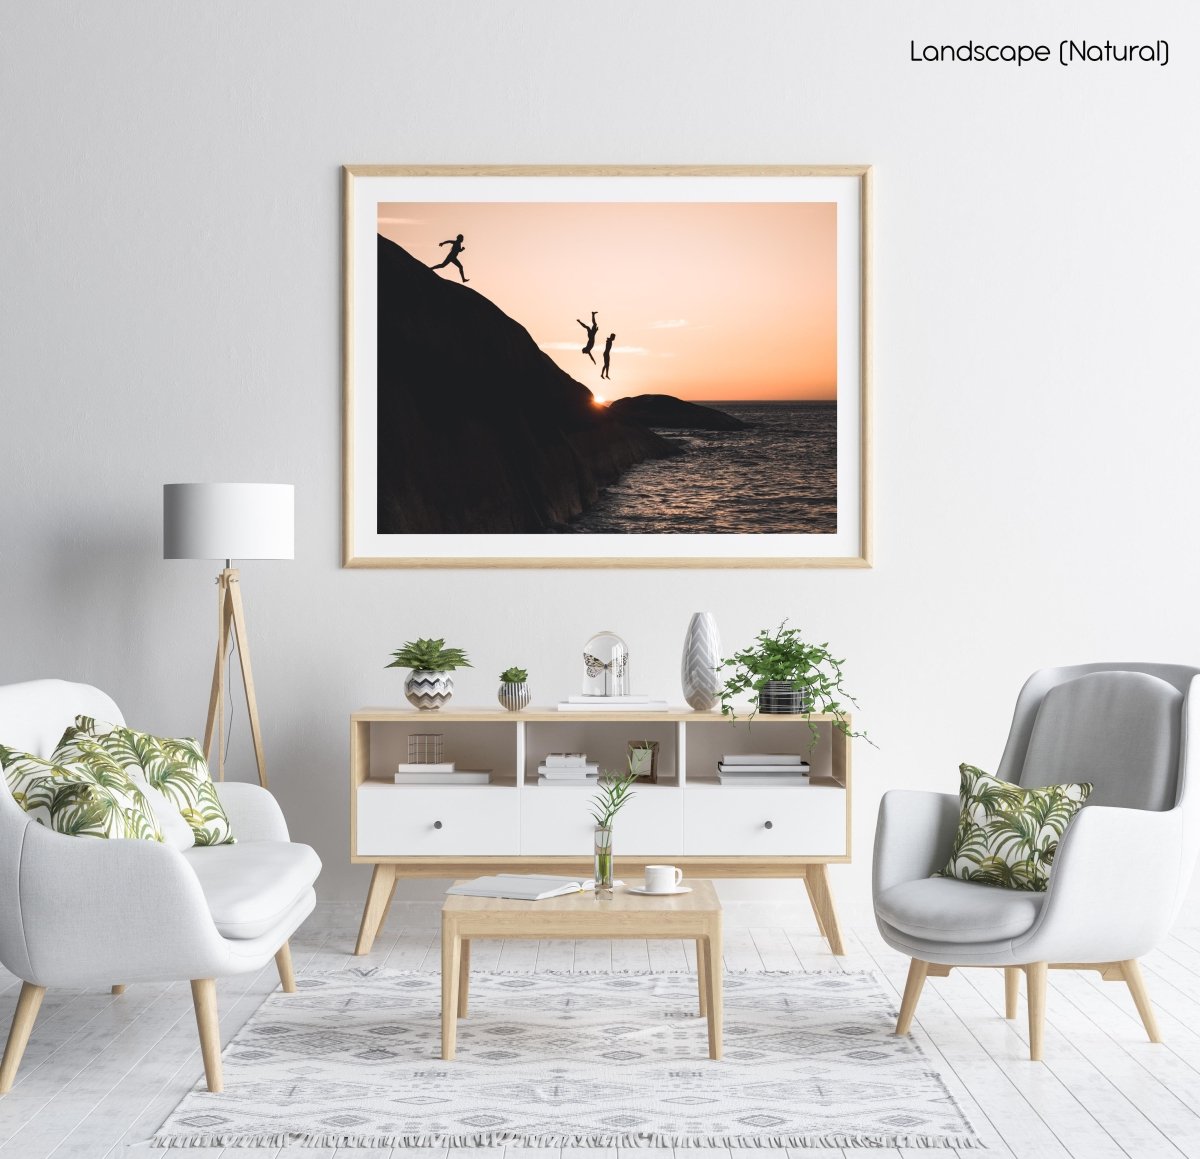 Three guys cliff jumping at sunset into ocean at Llandudno Beach in a natural fine art frame